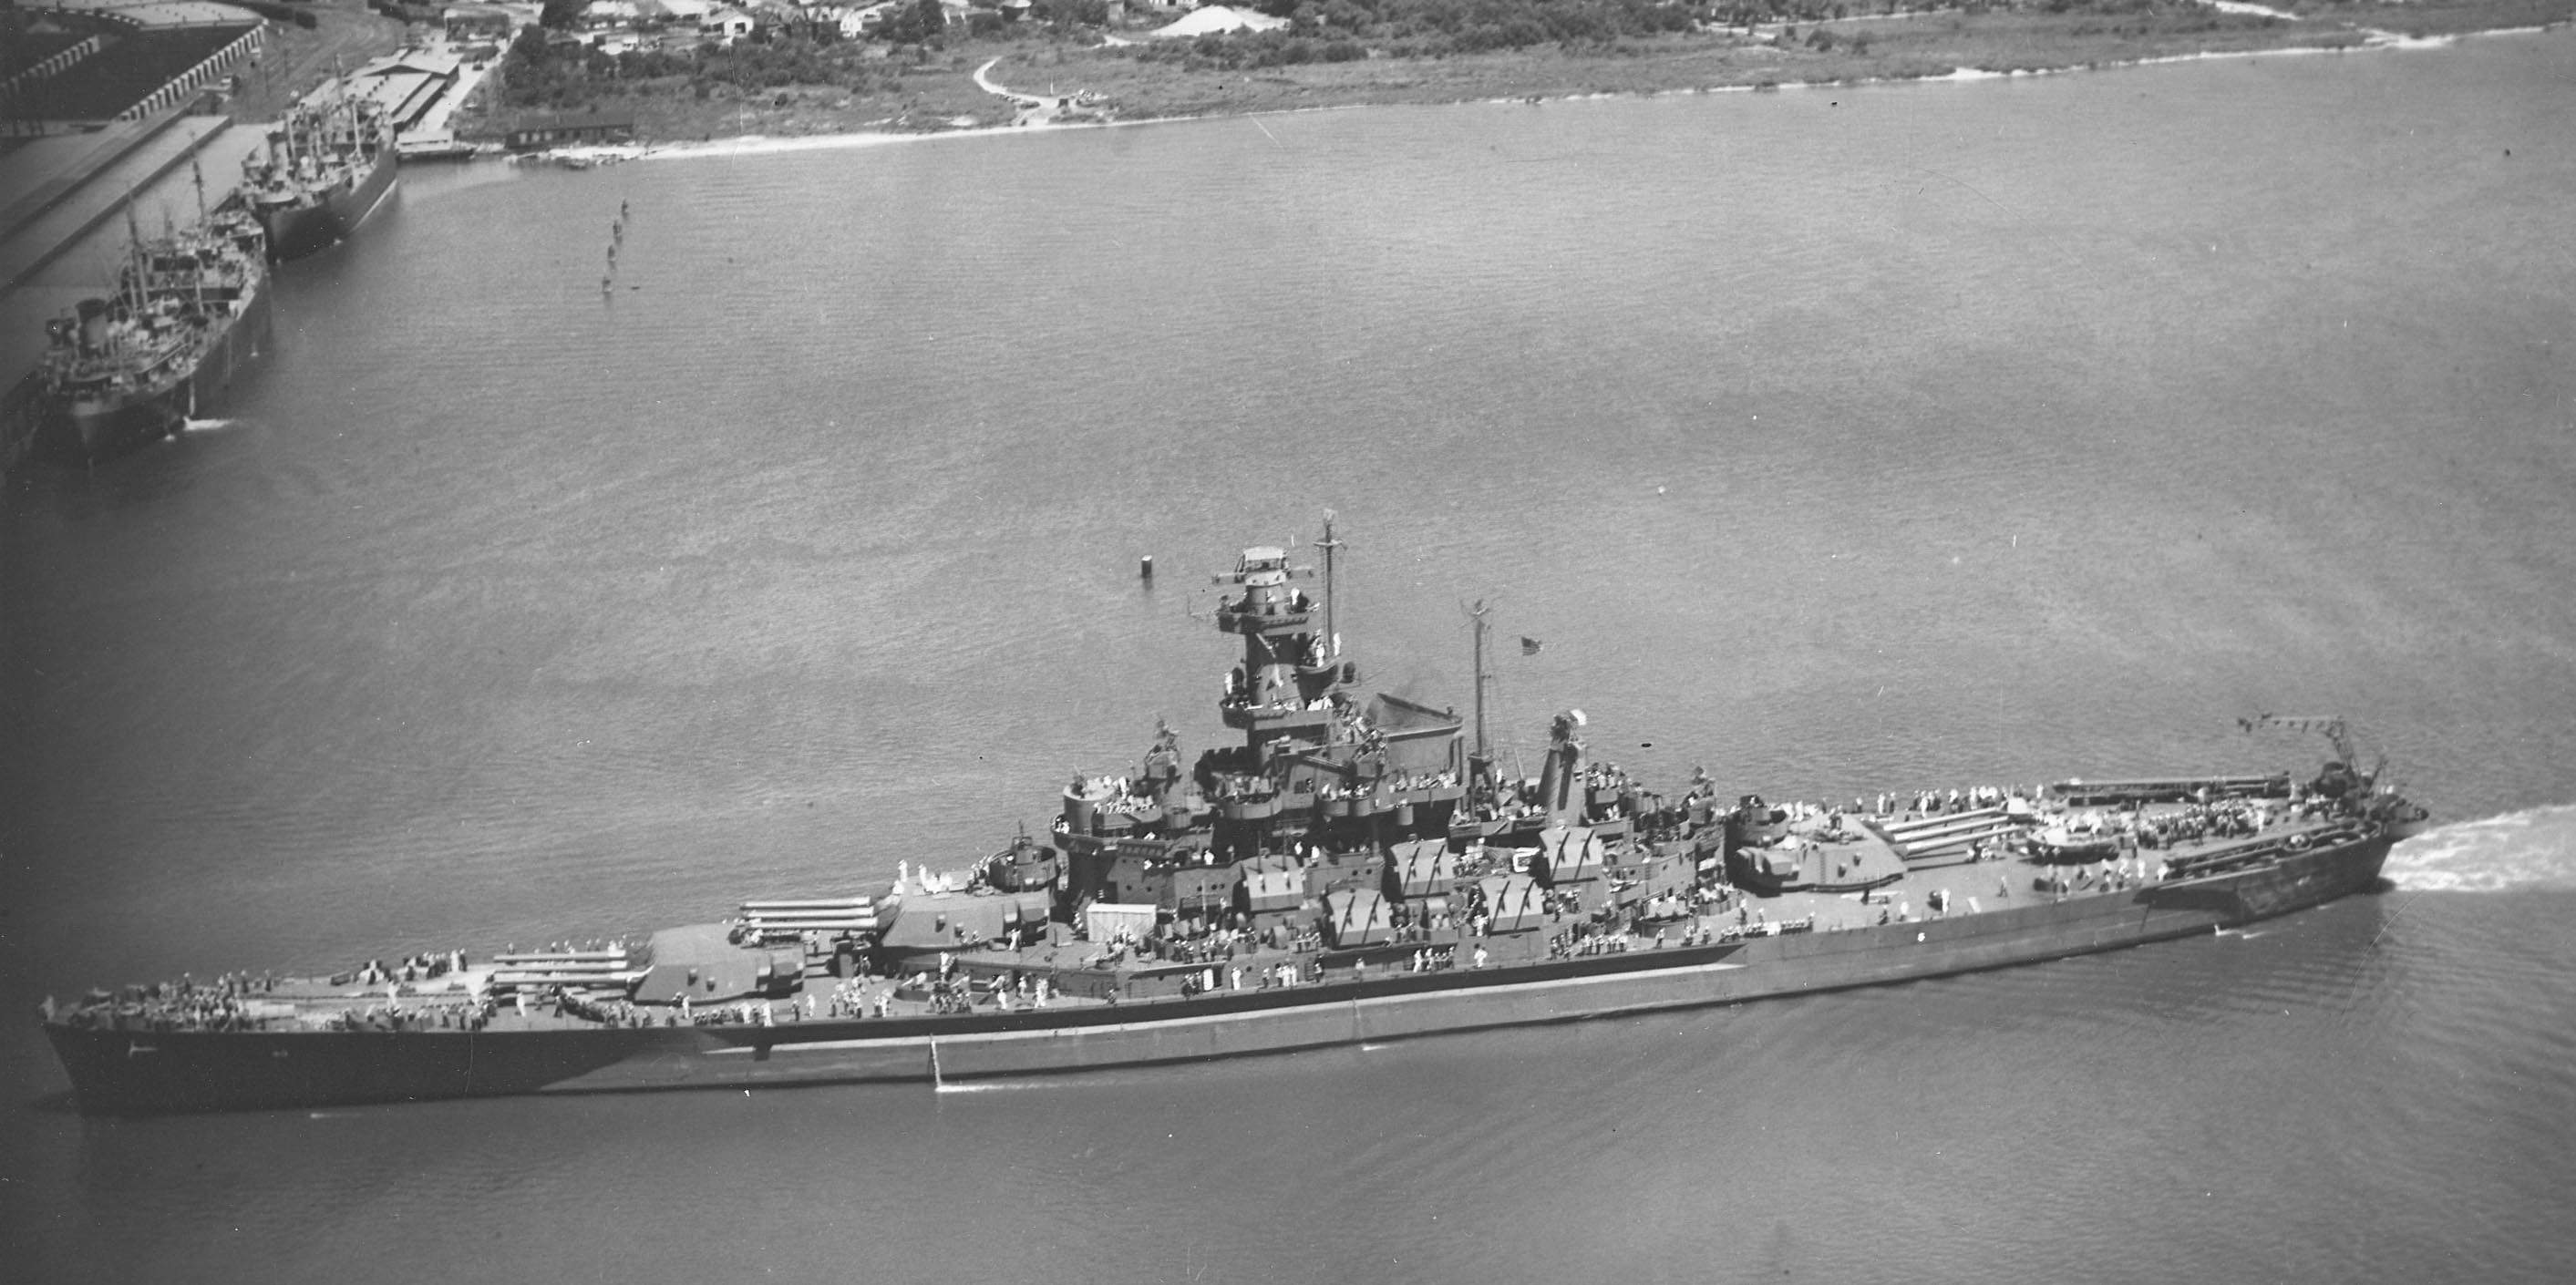 USS Alabama off Norfolk Naval Shipyard, Virginia, United States, 20 Aug 1943, photo 1 of 4